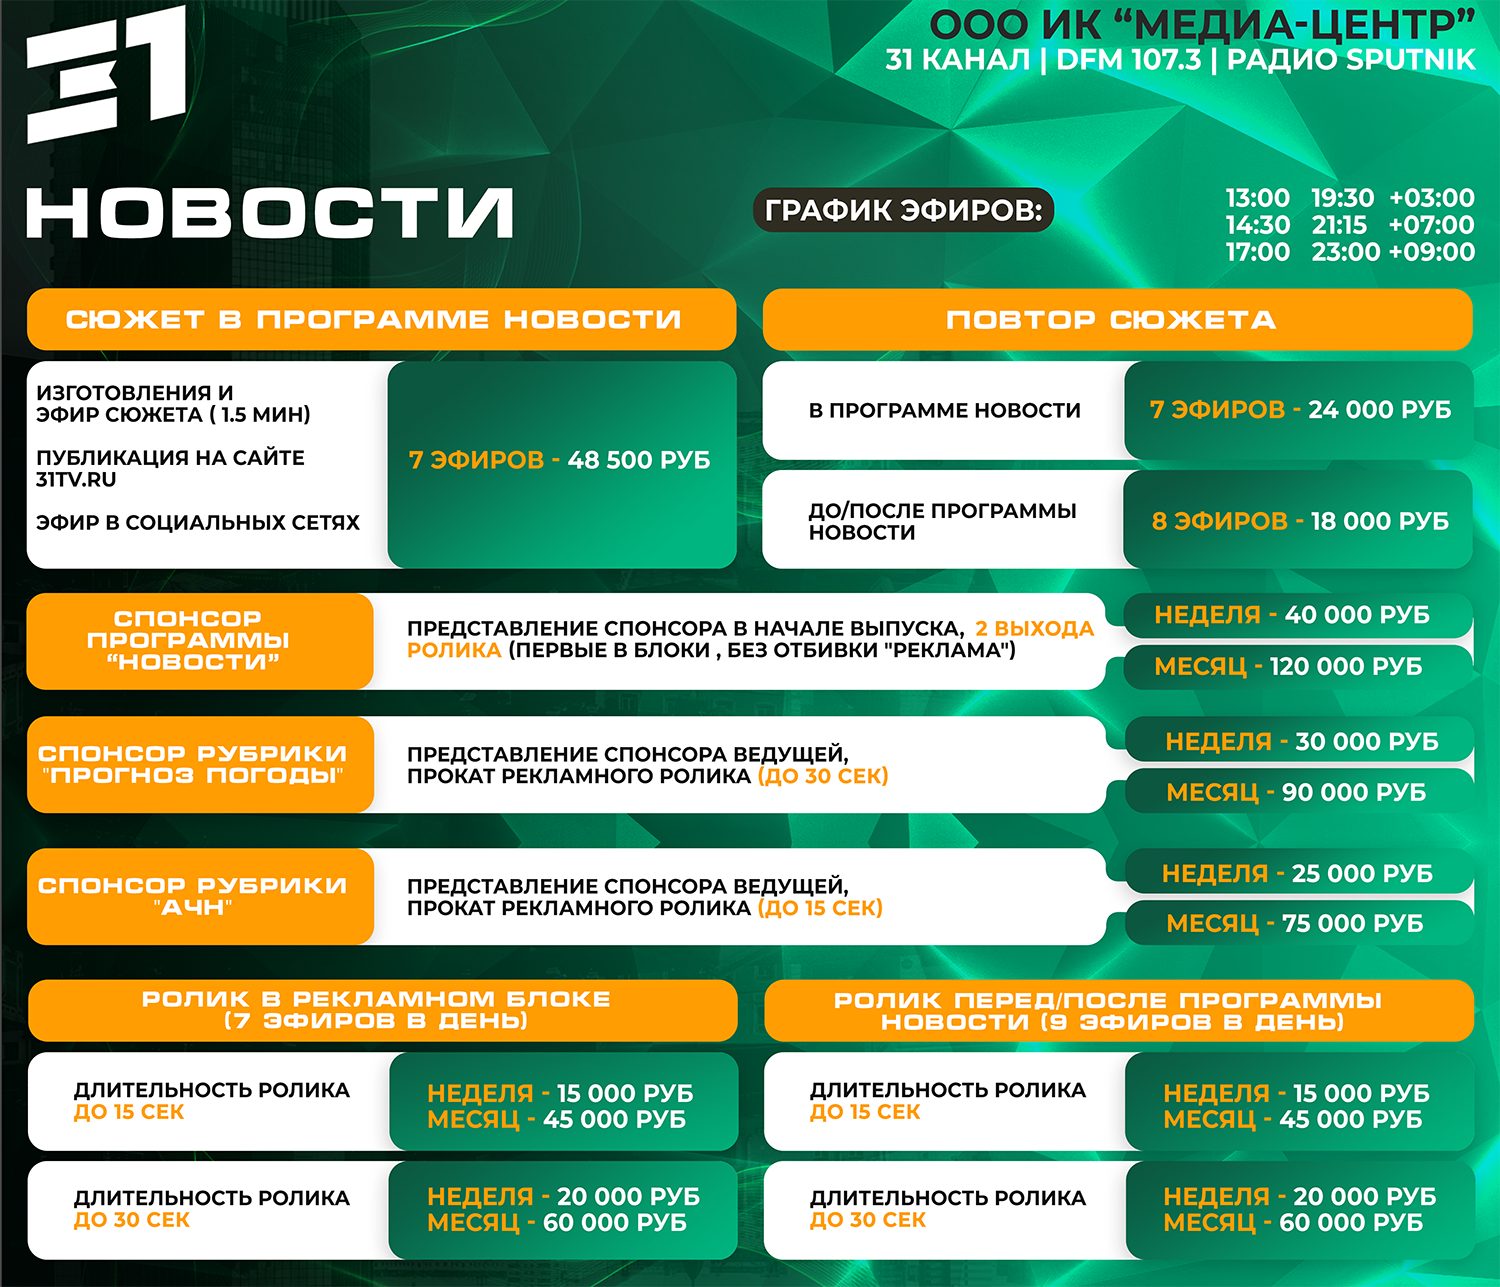 Тнт 4 программа челябинск. 31 Канал реклама. 31 Канал Челябинск.